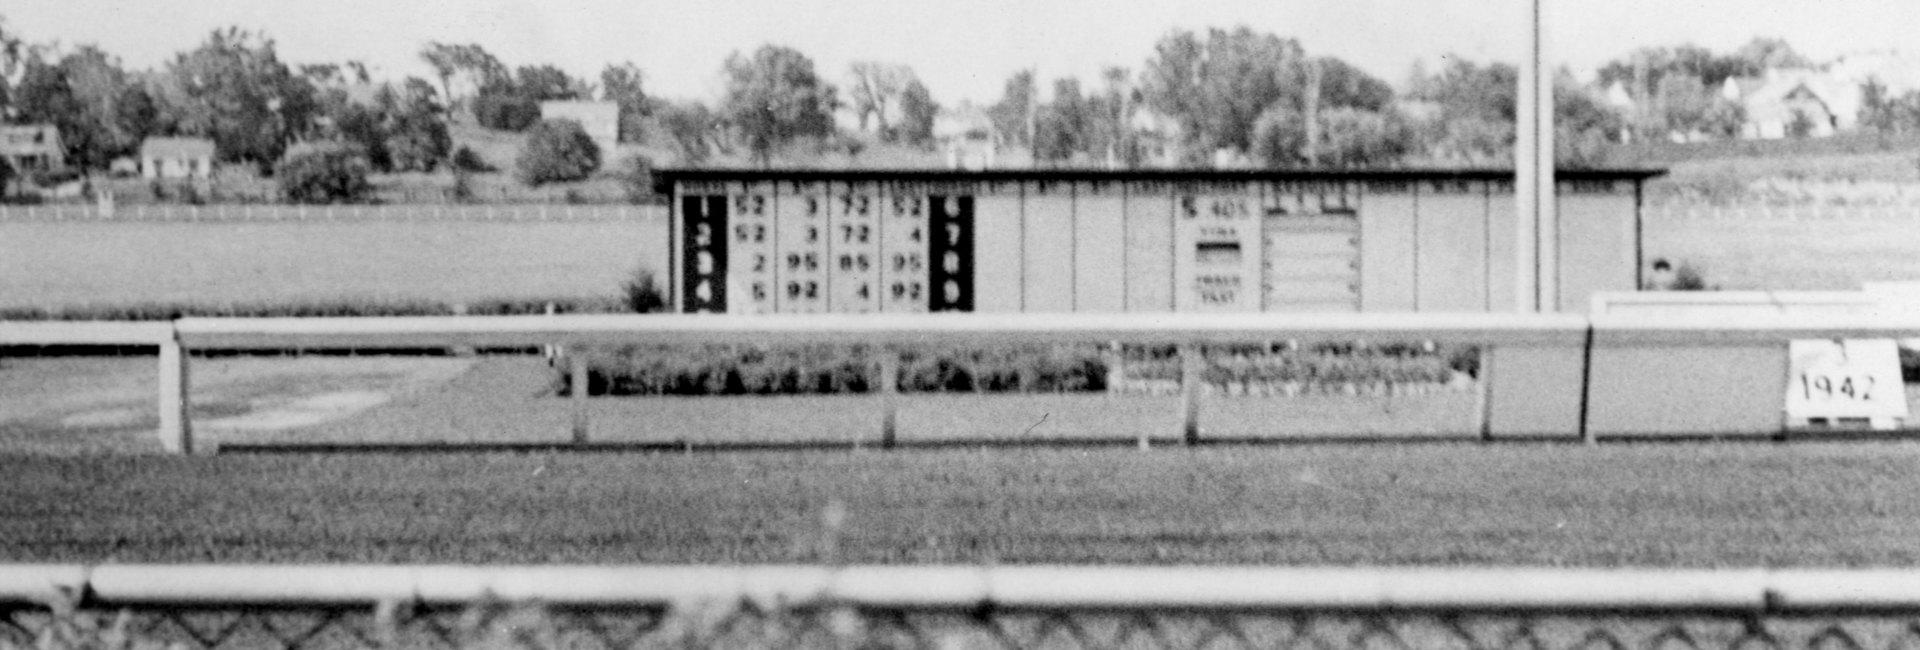 The Aksarben racetrack scoreboard in 1946/1947